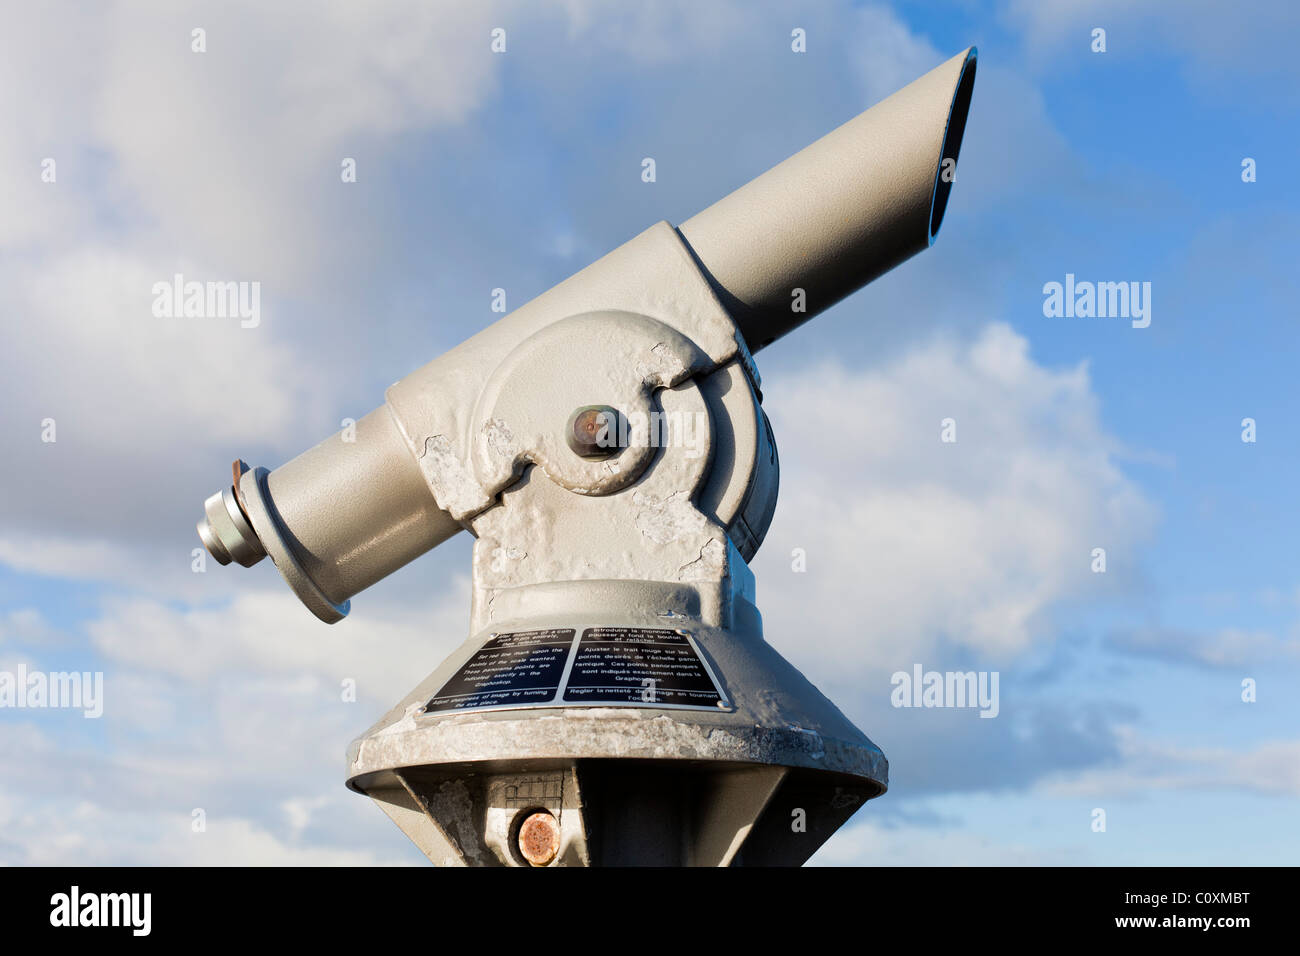 Graphoskop coin operated telescope Stock Photo